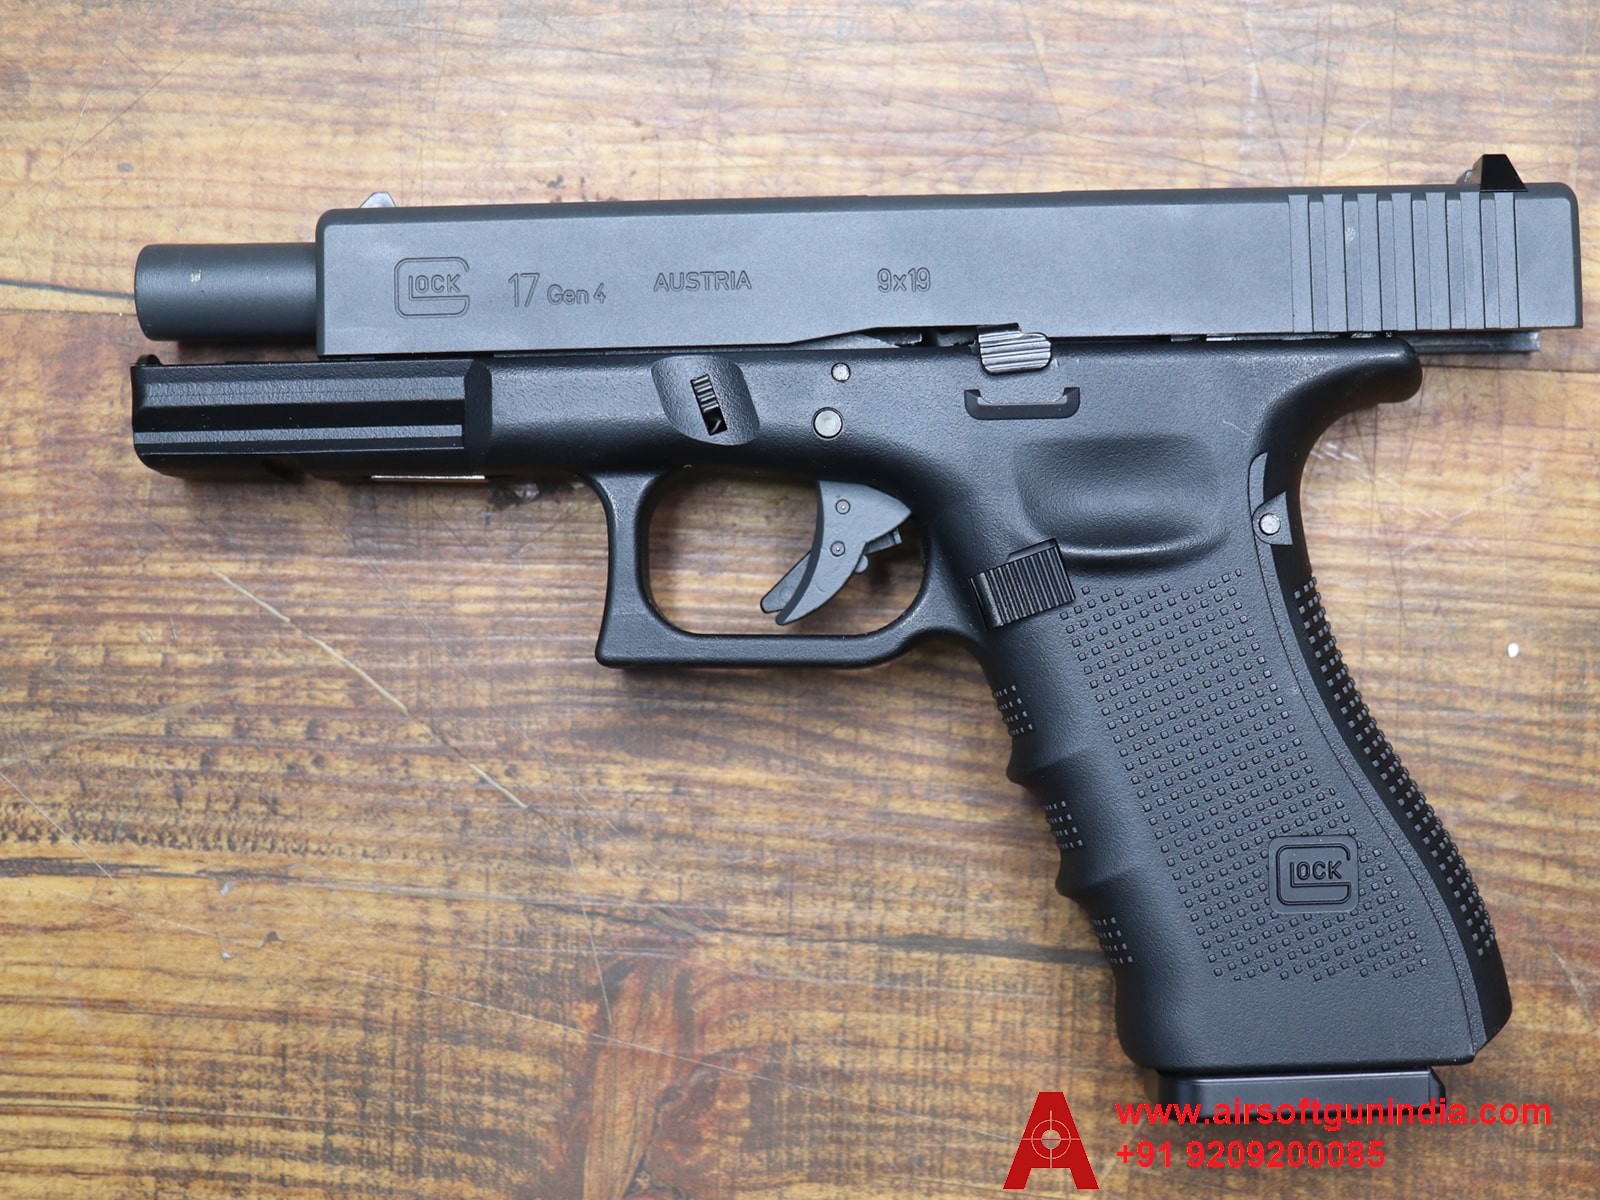 Umarex Glock 17 Generation 4 CO2 .177cal, 4.5mm BB Air Pistol